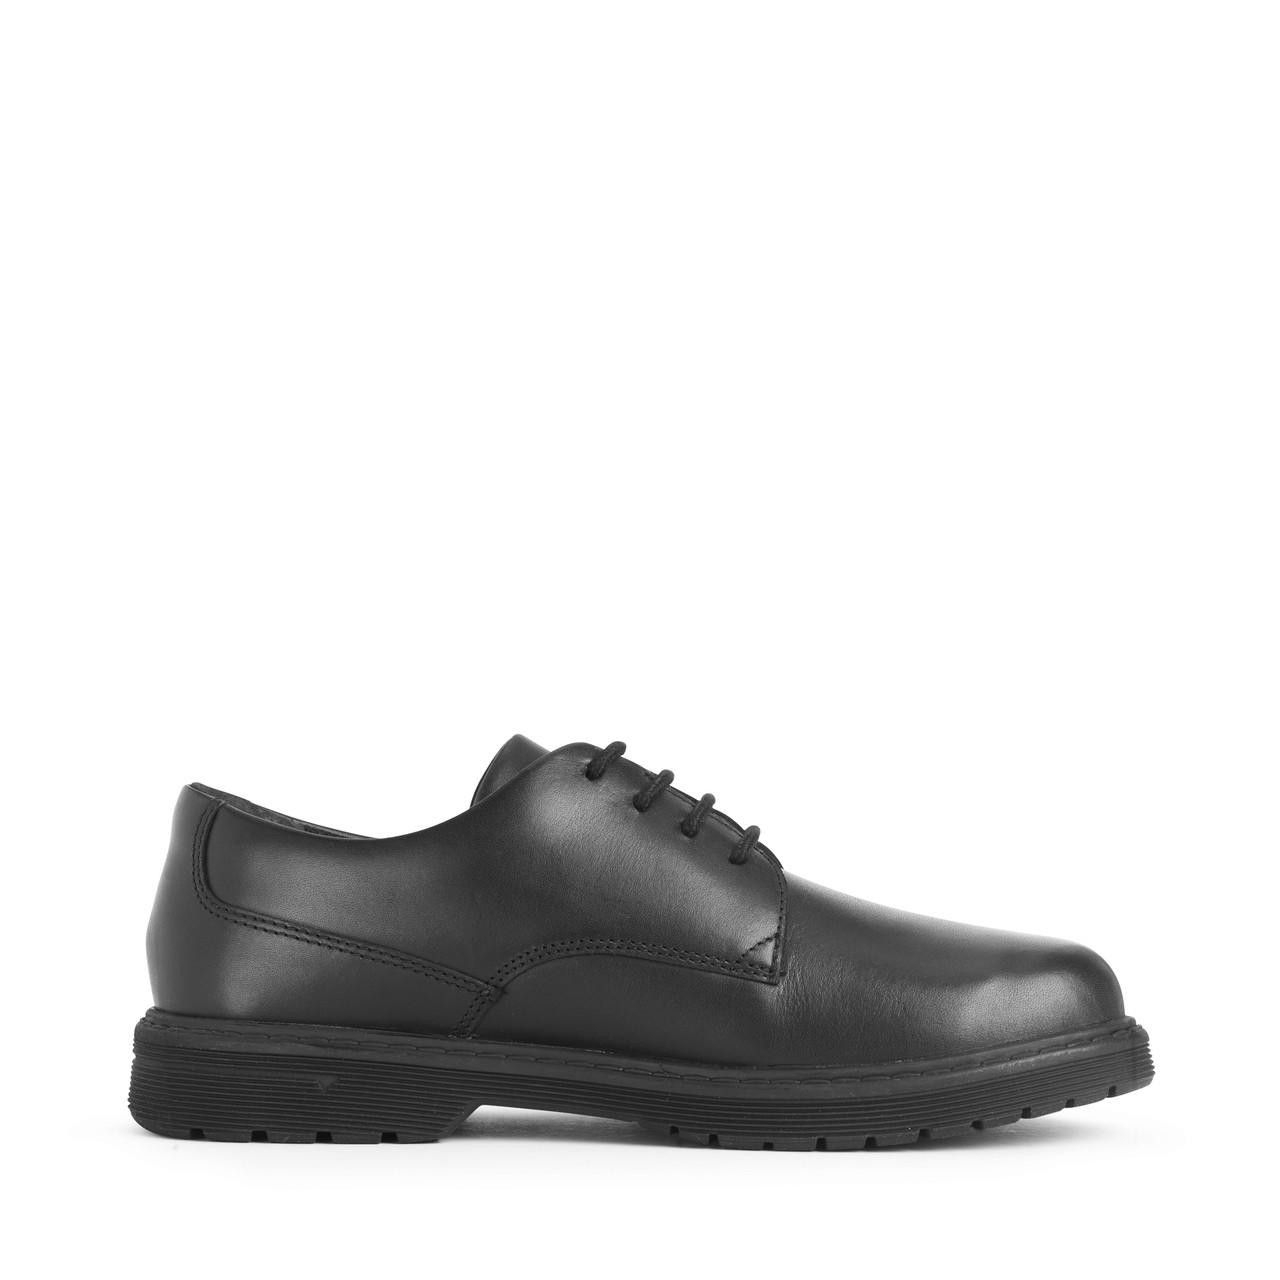 Glitch, Black leather boys lace-up school shoes